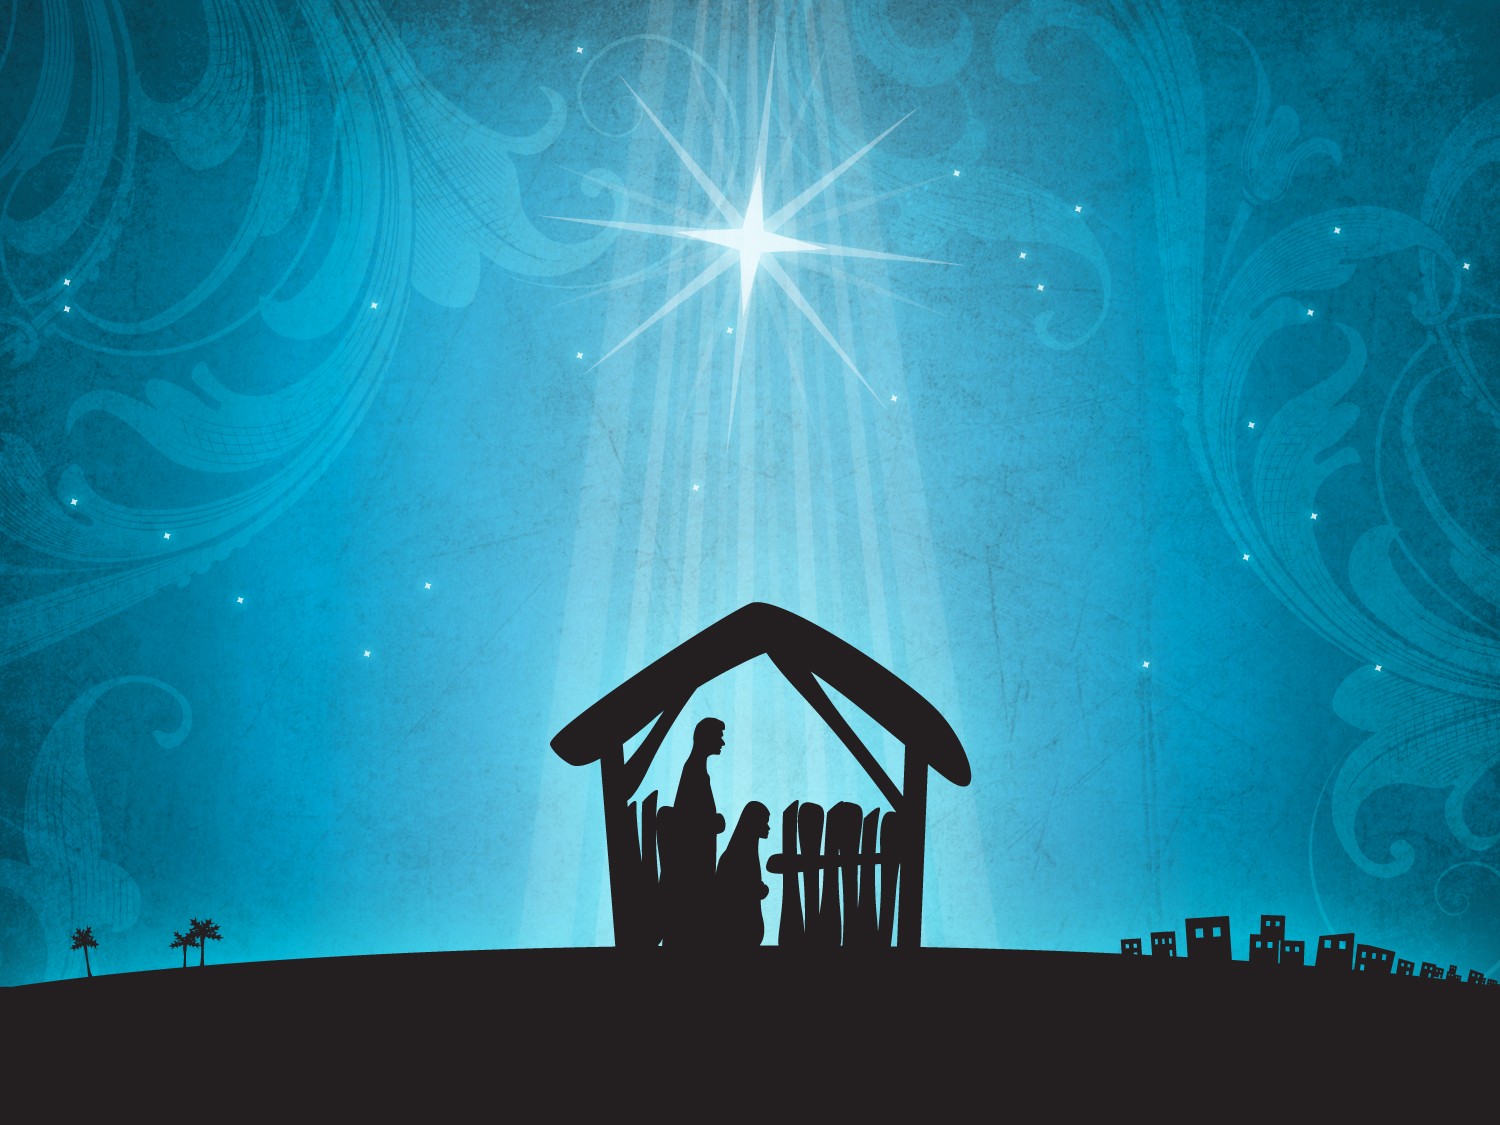 69+] Christmas Nativity Wallpaper - WallpaperSafari